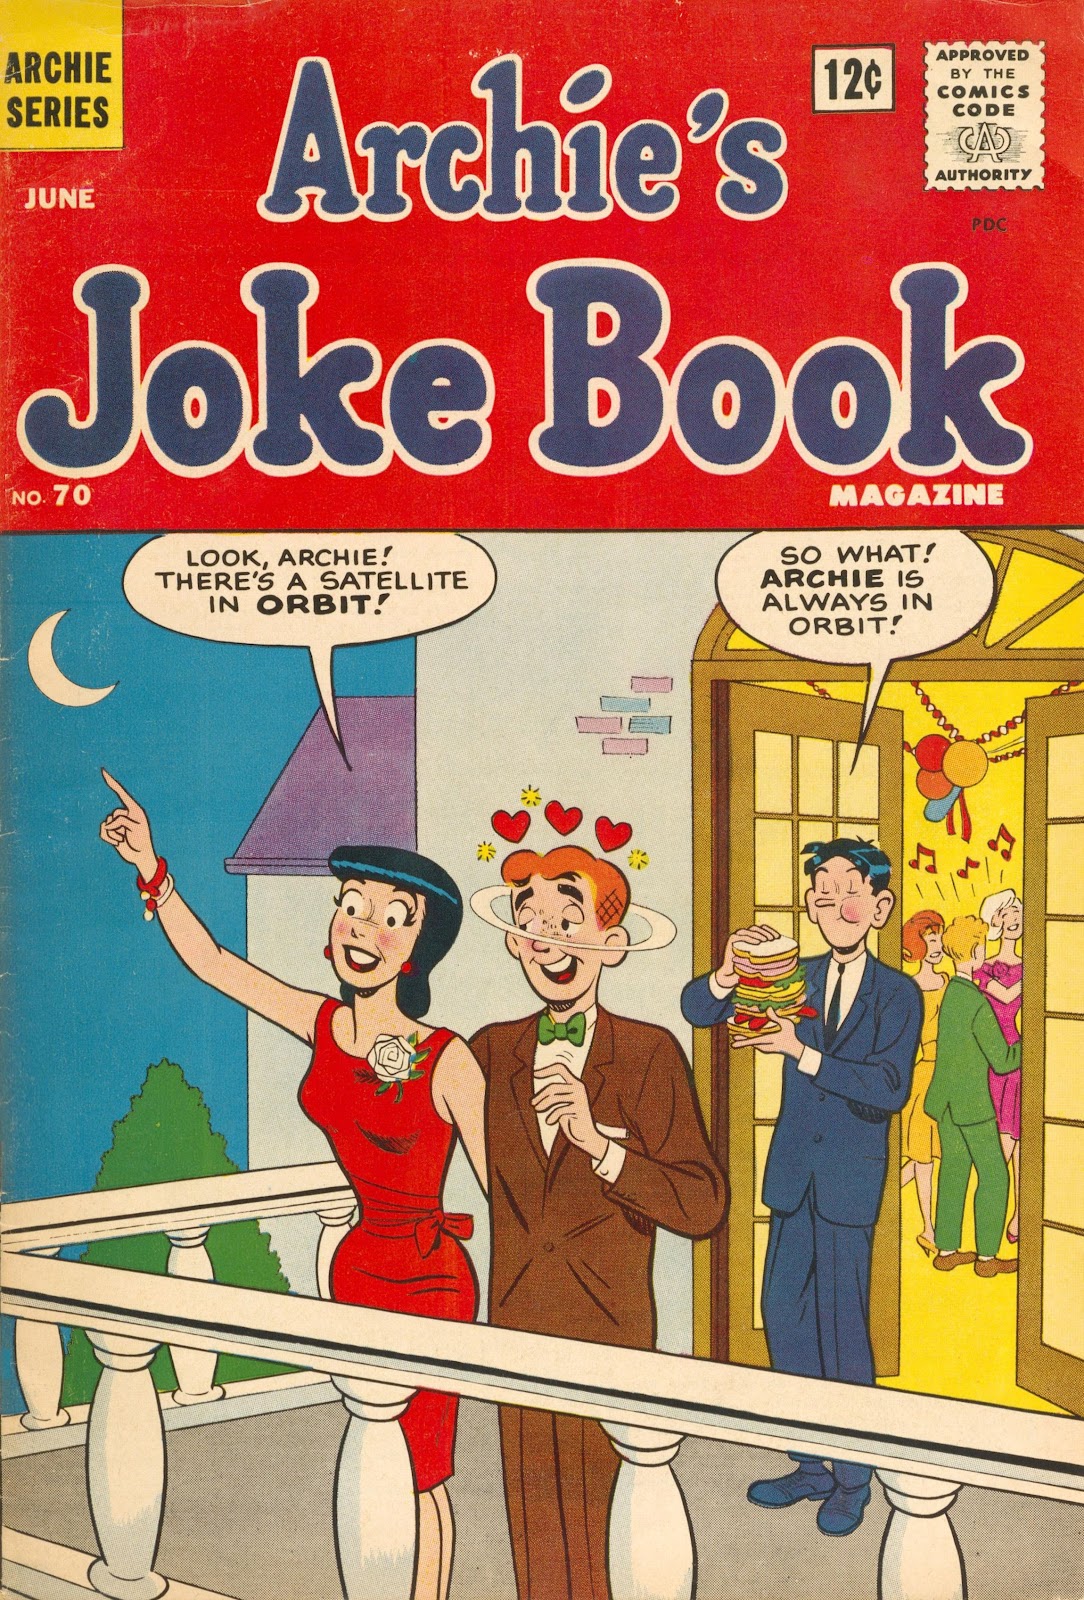 Archie's Joke Book Magazine issue 70 - Page 1